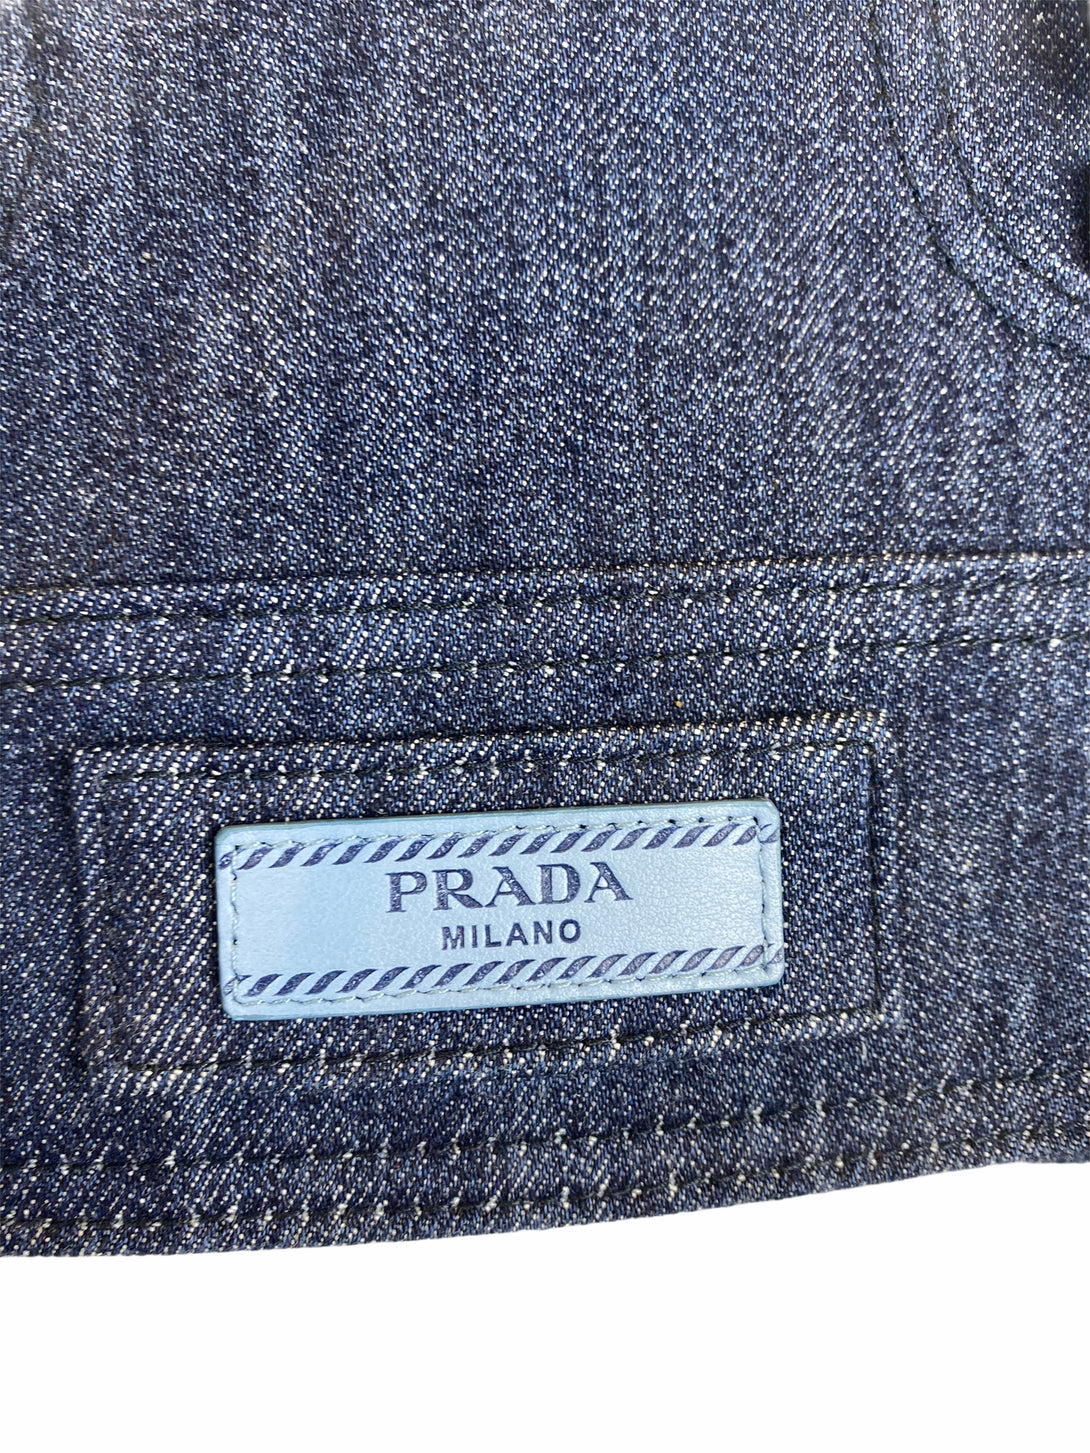 Prada Leather & Denim Shoulder Bag - As Seen On Instagram 09/09/2020 - Siopaella Designer Exchange